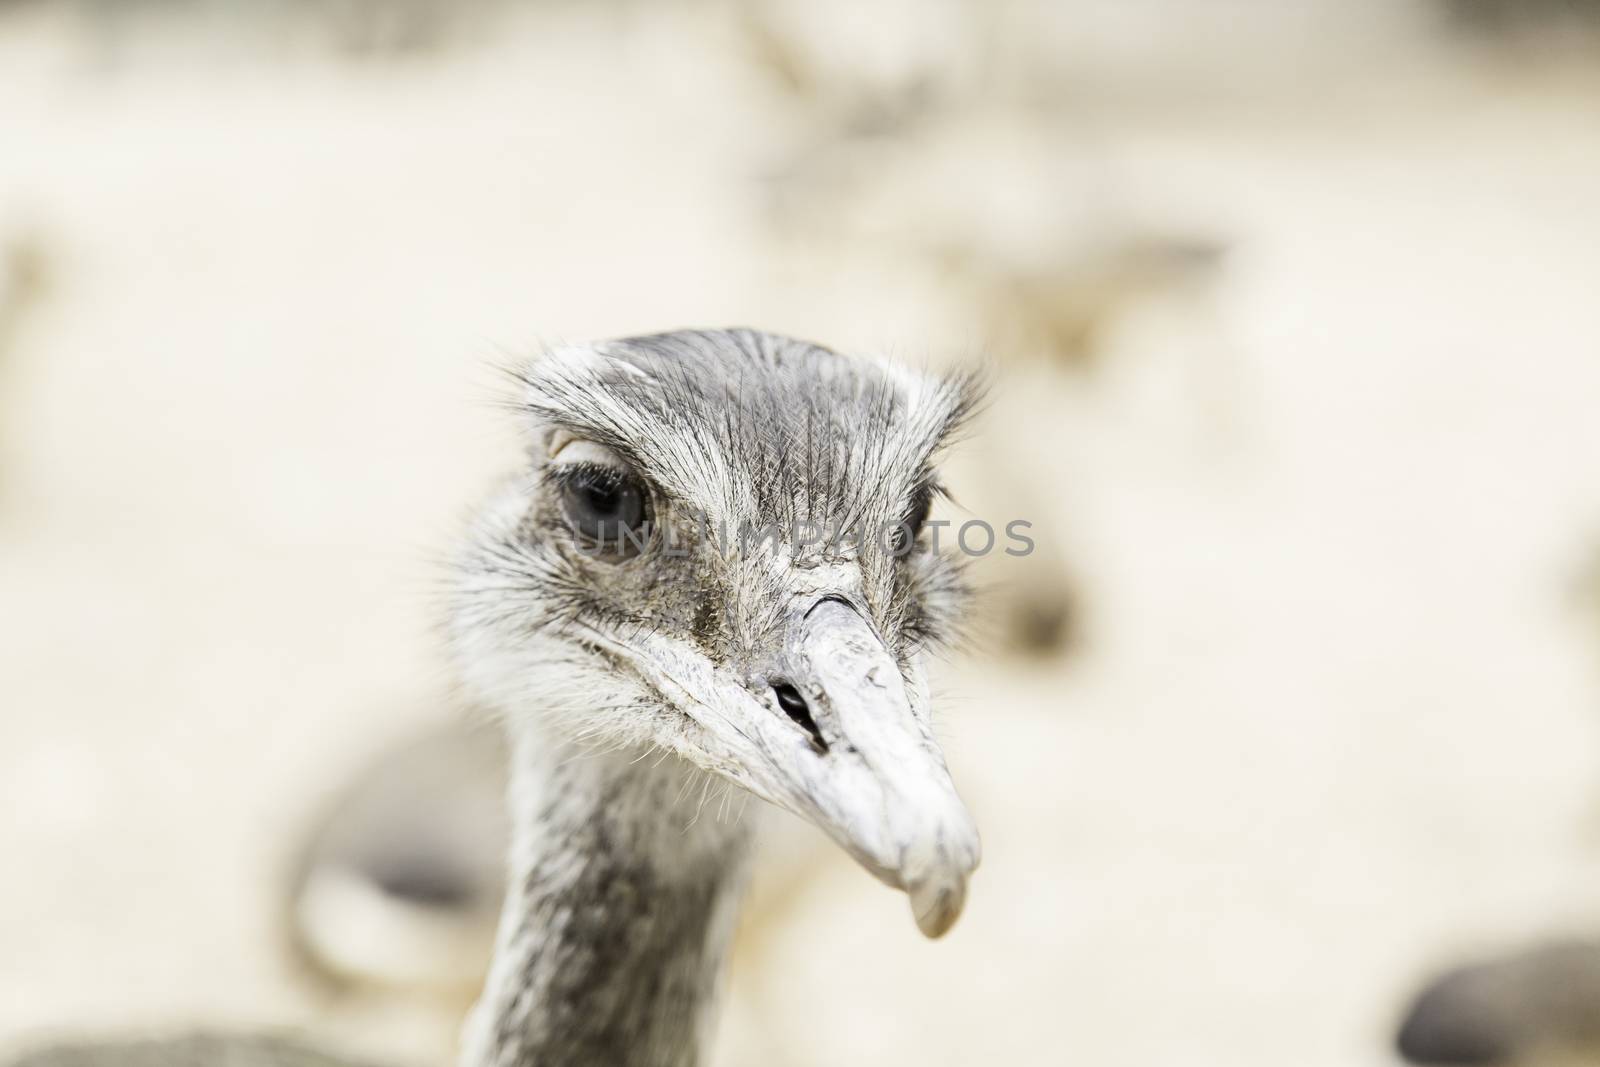 Ostrich head by esebene